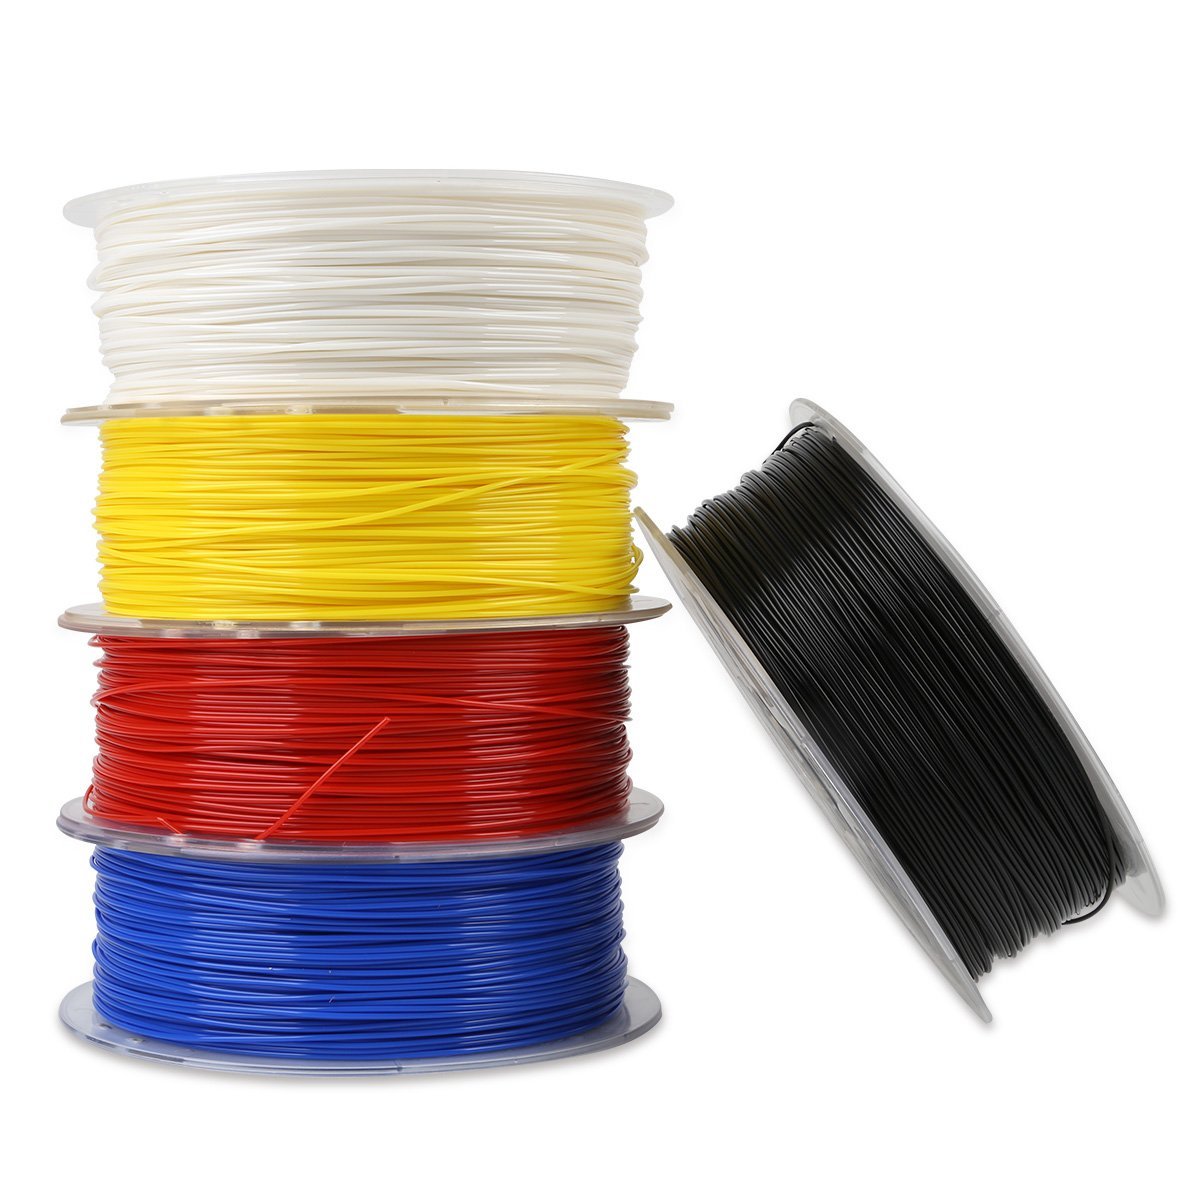 PLA Filament For CreaPrint3D™ DIY Home 3D Printer for Creativity Model Building & Prototyping